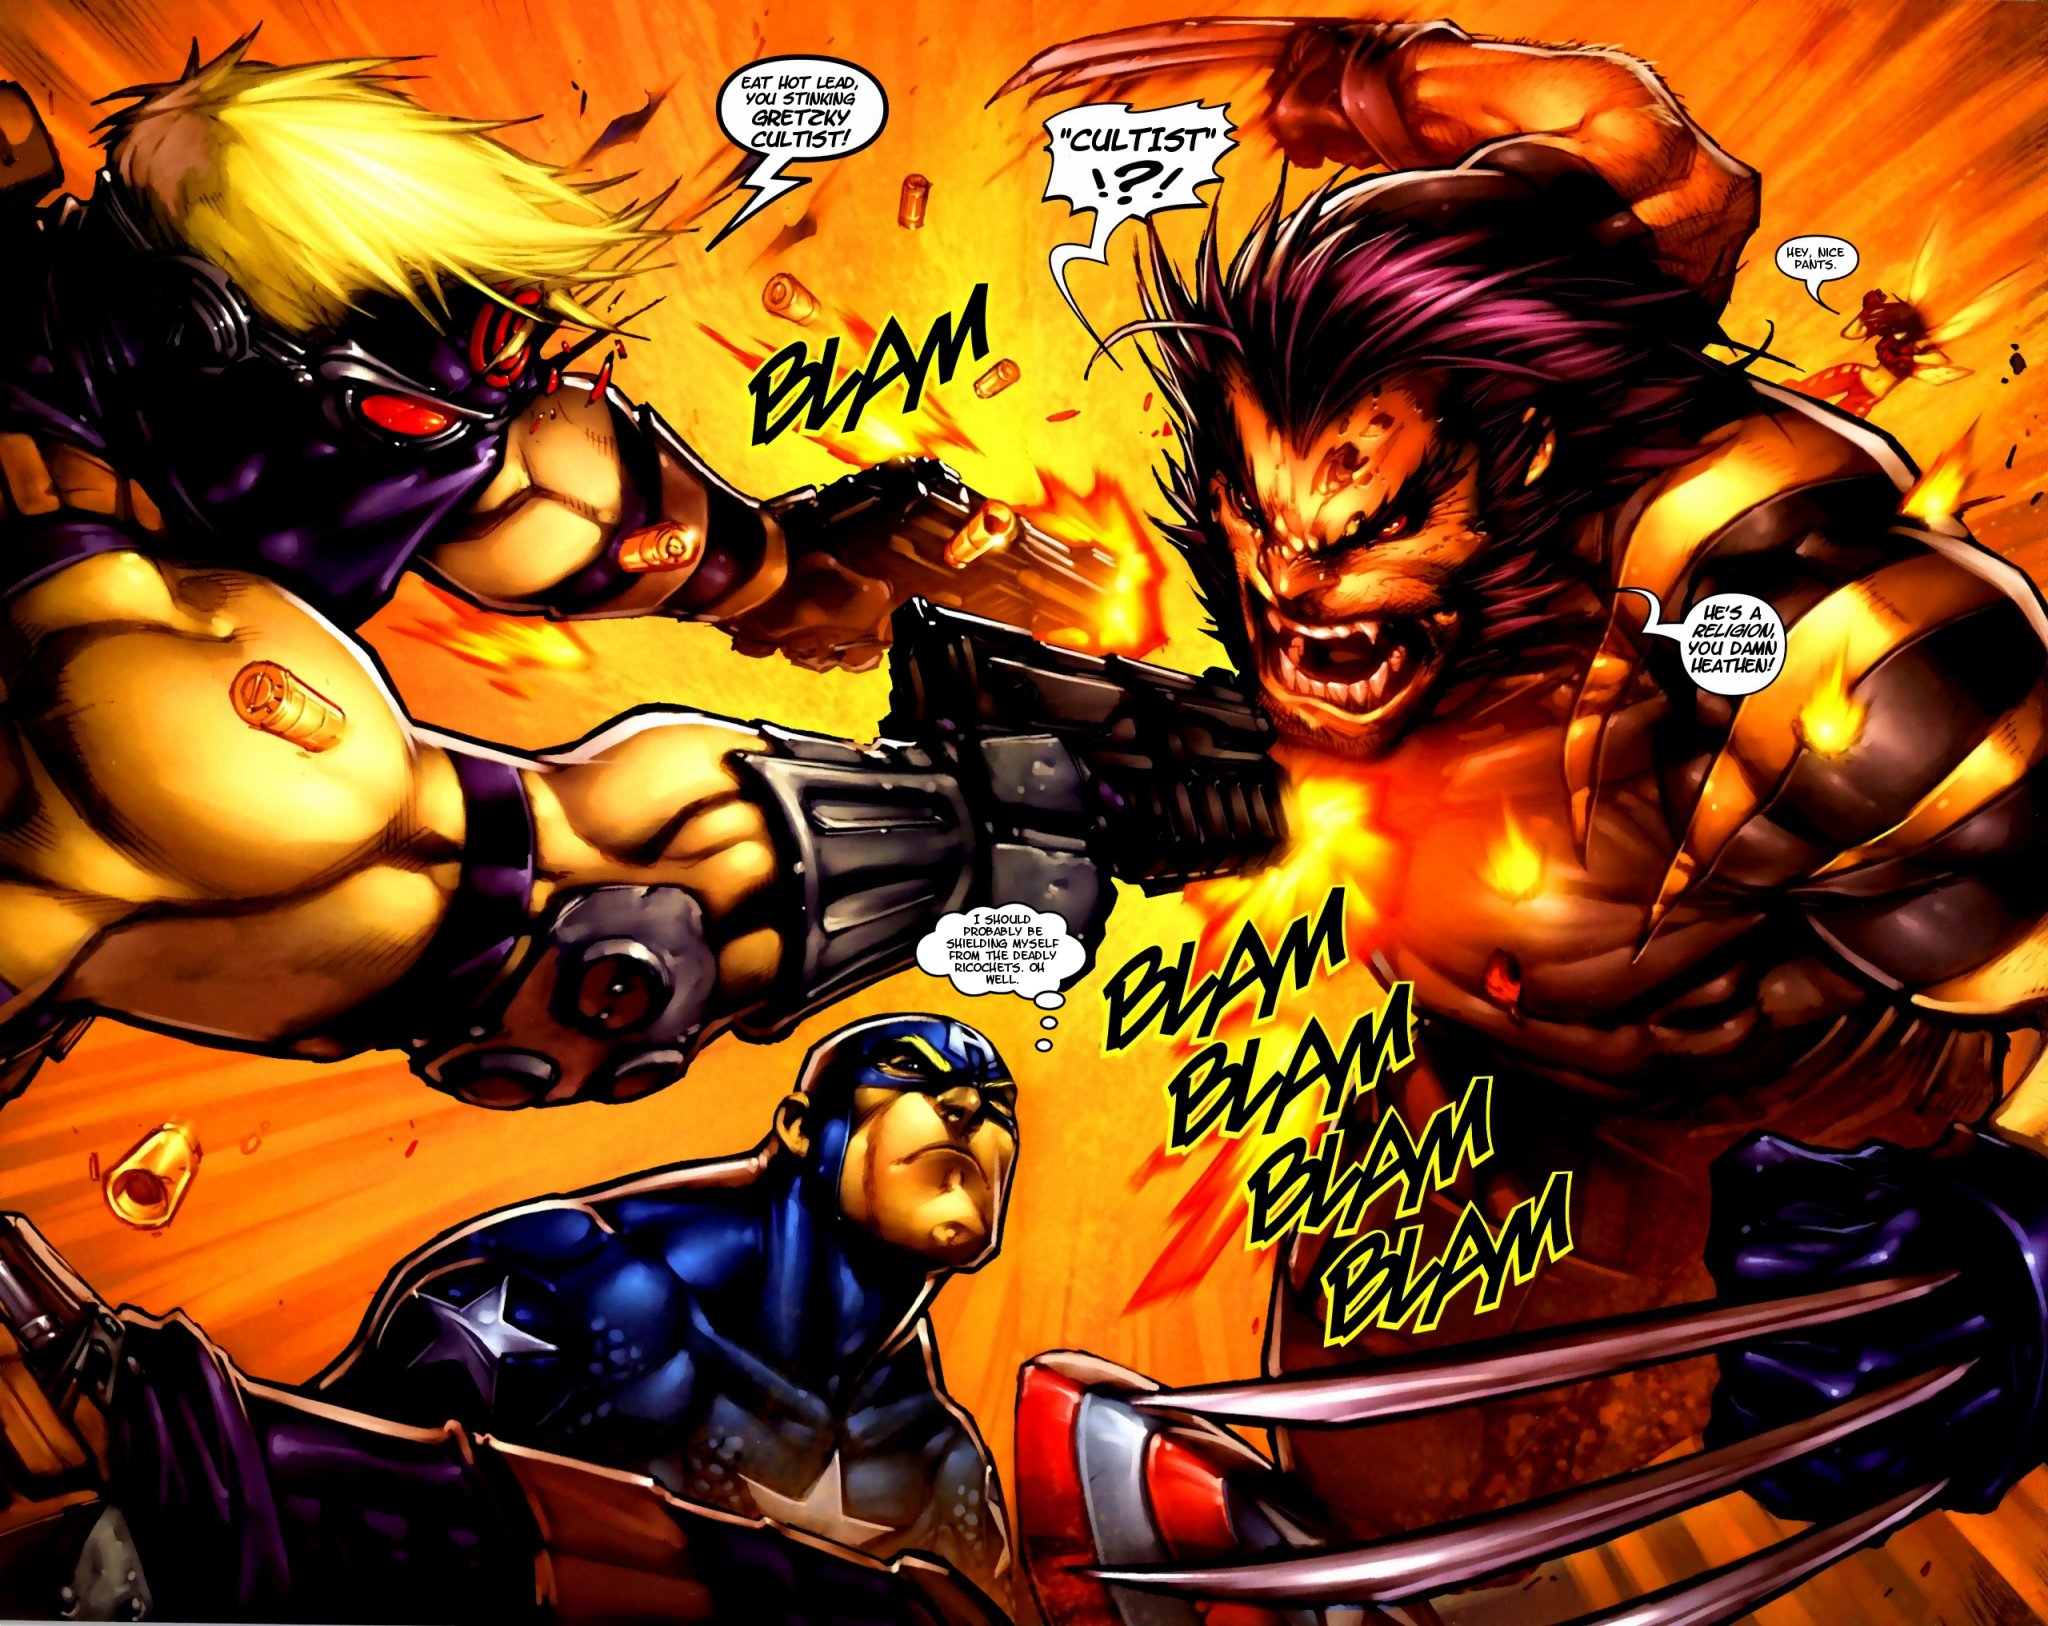 Superhero wallpaper featuring X-Men, Captain America, and Wolverine